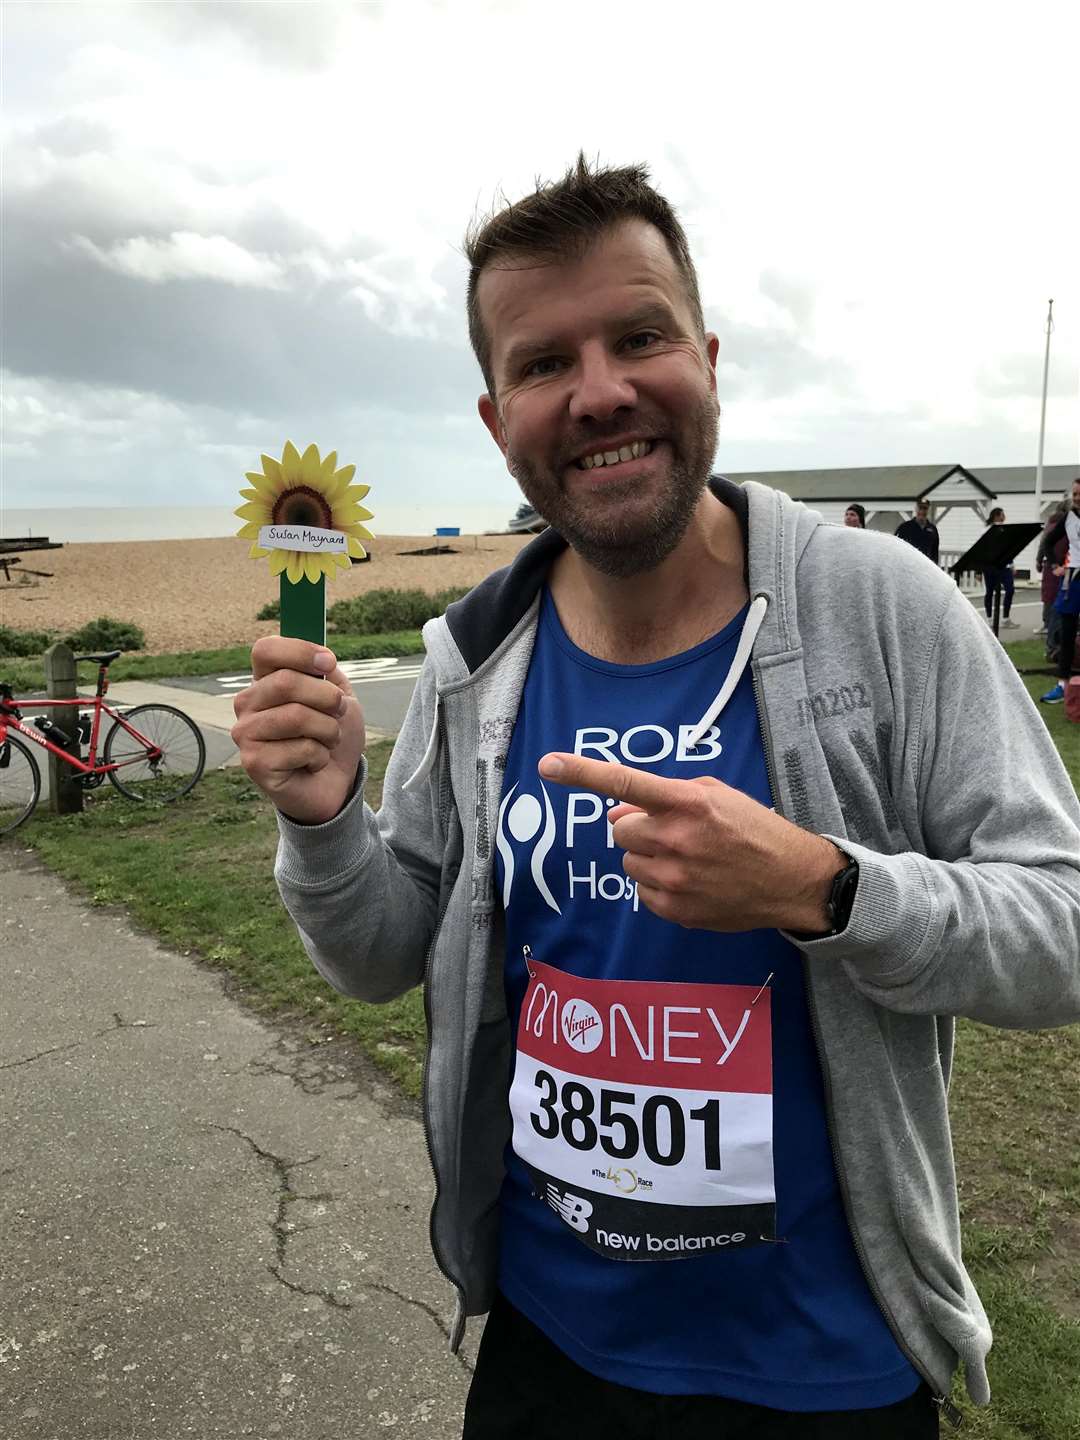 London Marathon 2021: Rob Maynard a the finsh of the virtual marathon in October with his mum's sunflower (50185448)